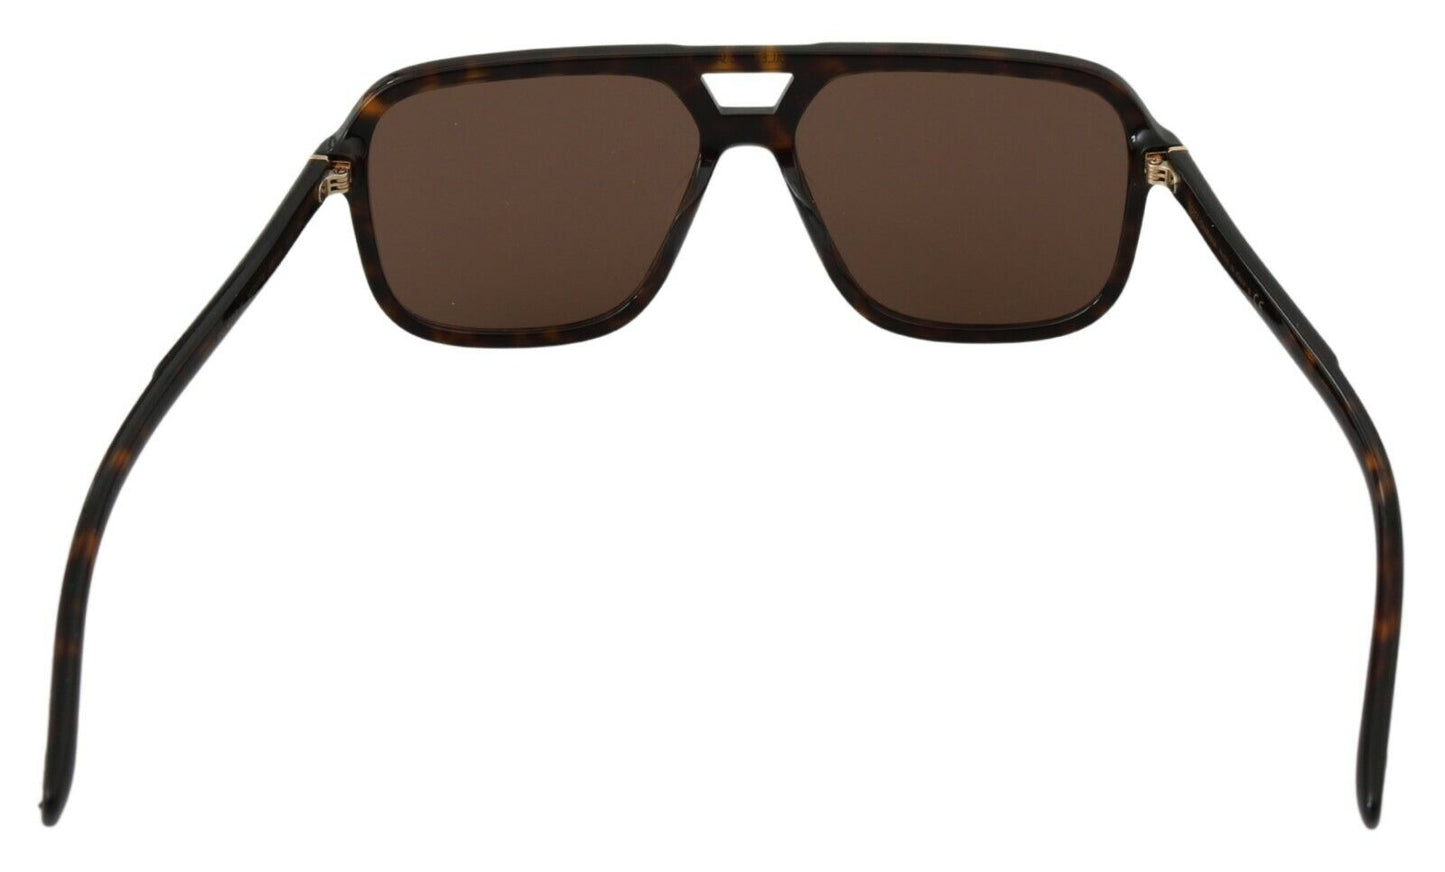 Dolce & Gabbana Elegant Brown Patterned Men's Sunglasses